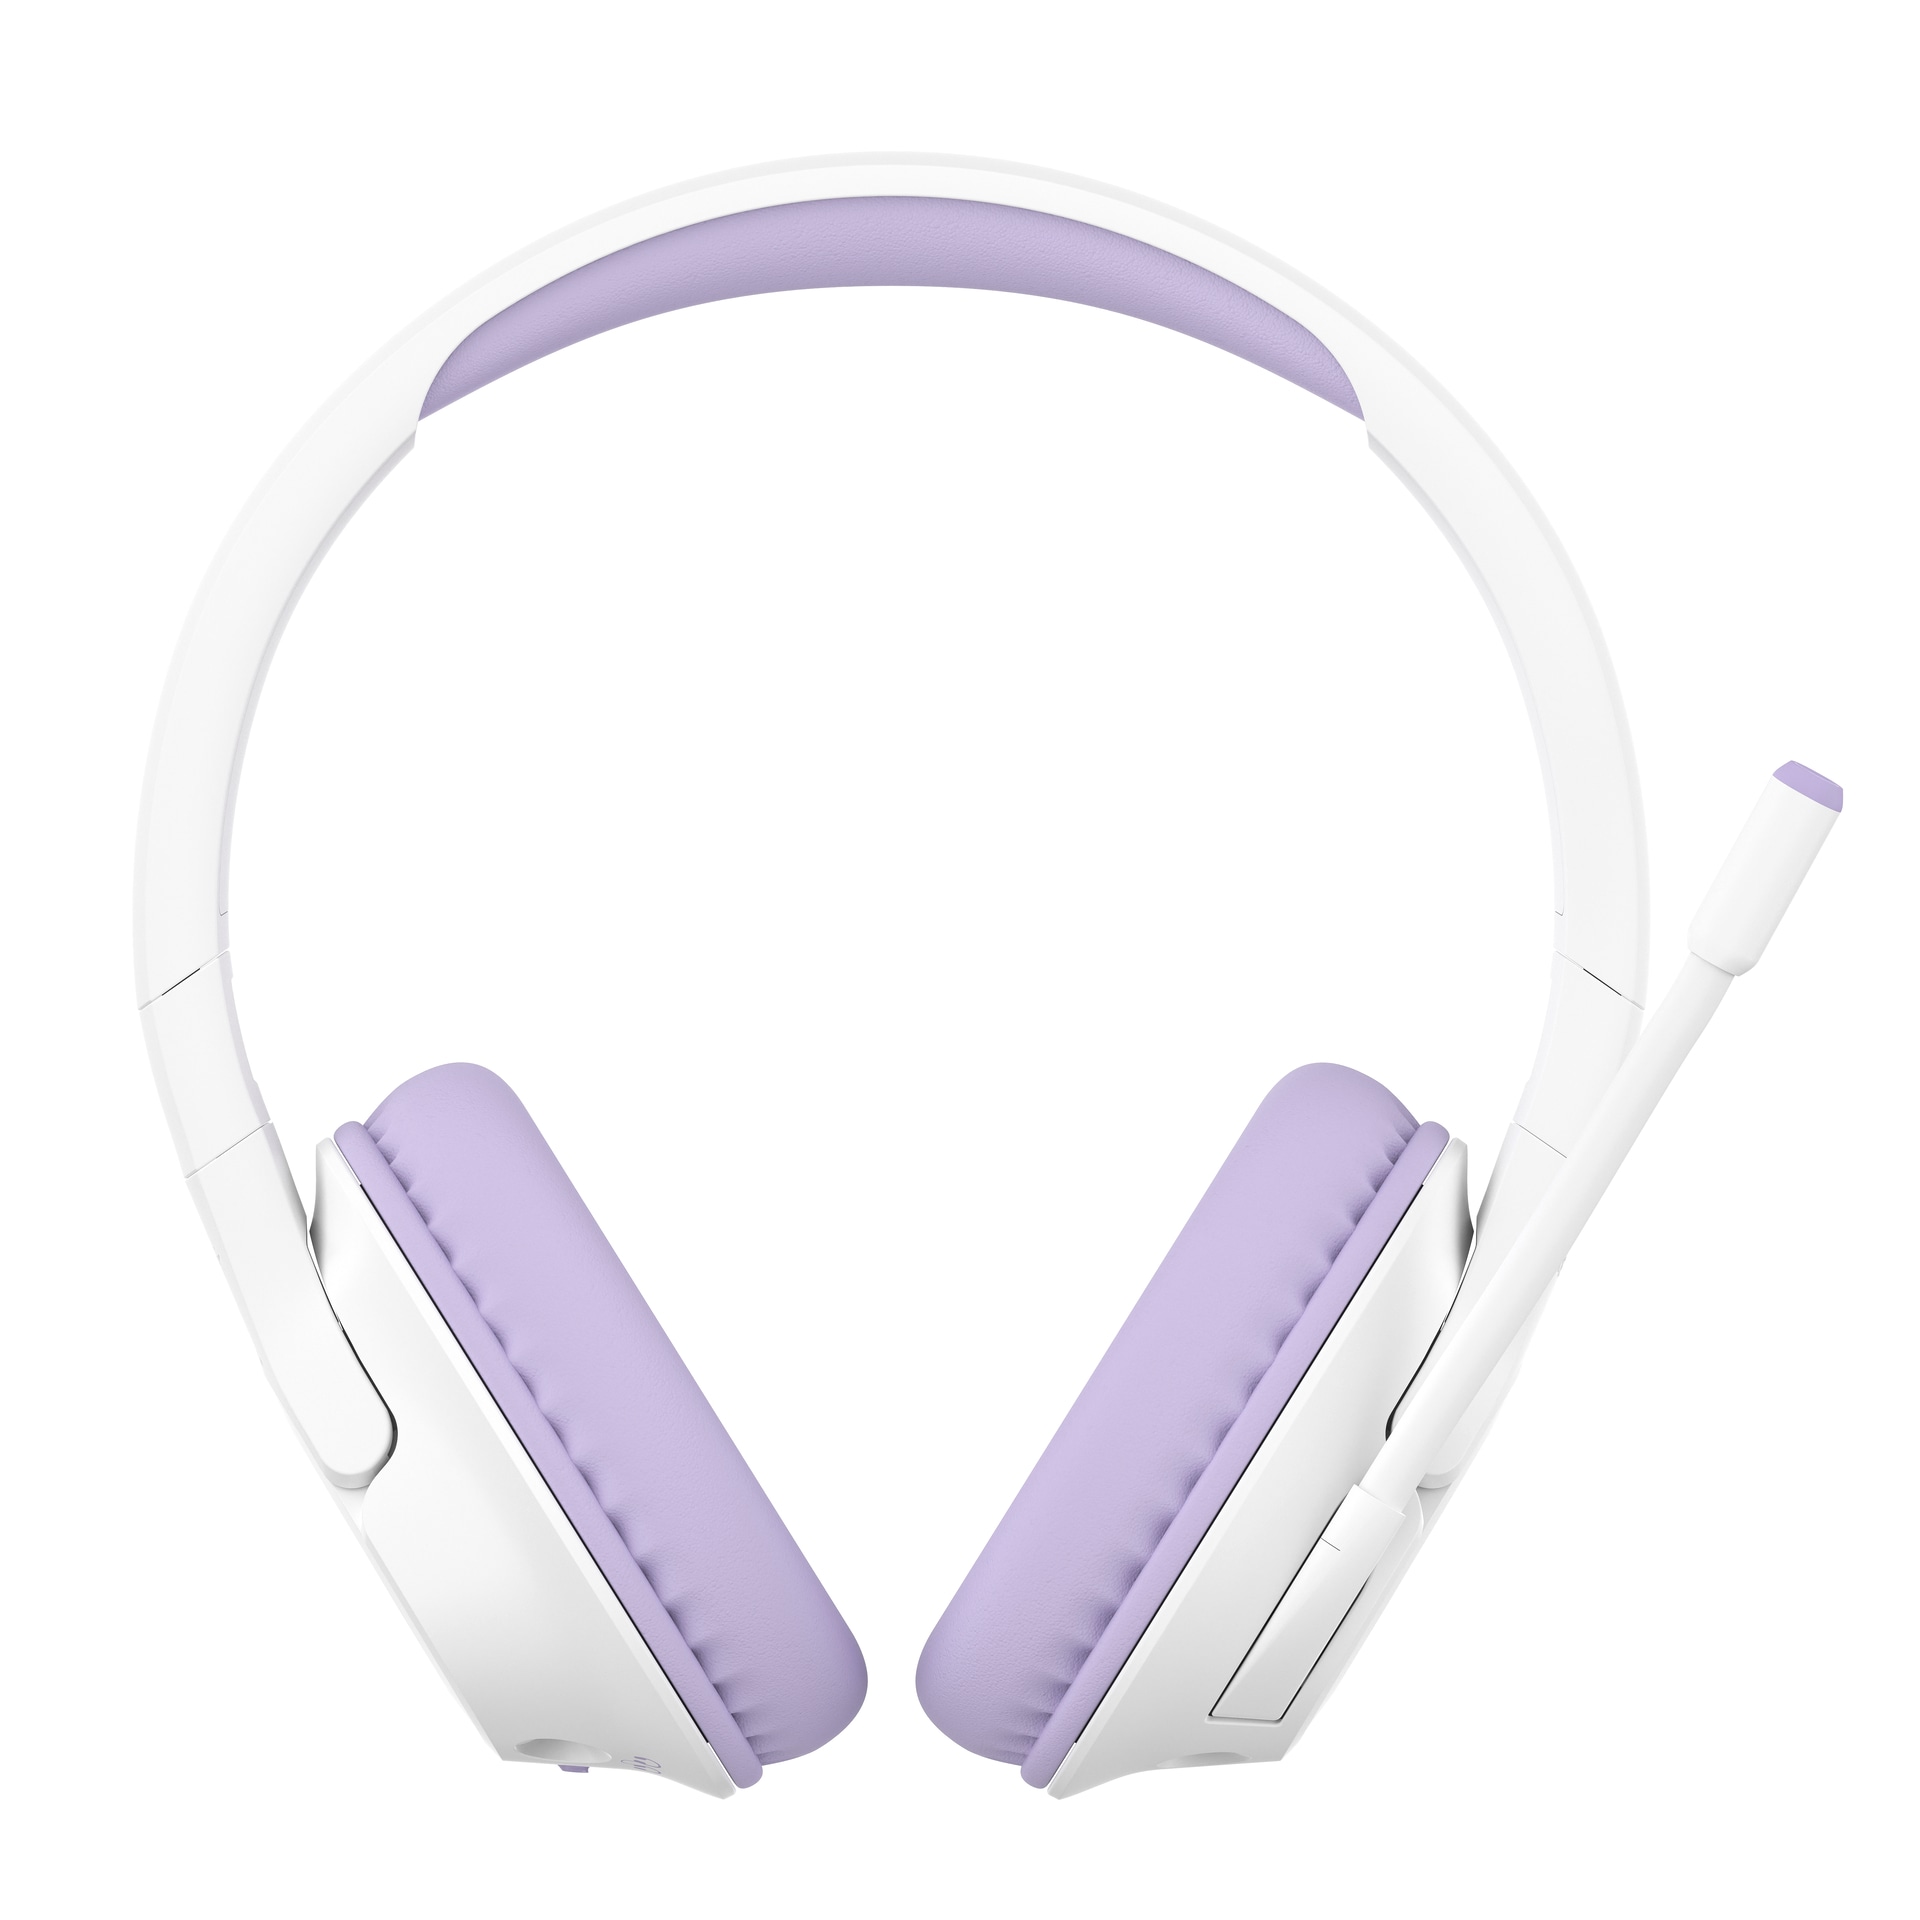 Belkin wireless Kopfhörer »SOUNDFORM INSPIRE Over-Ear BT Kinder-Kopfhörer«,  Stummschaltung jetzt bestellen bei OTTO